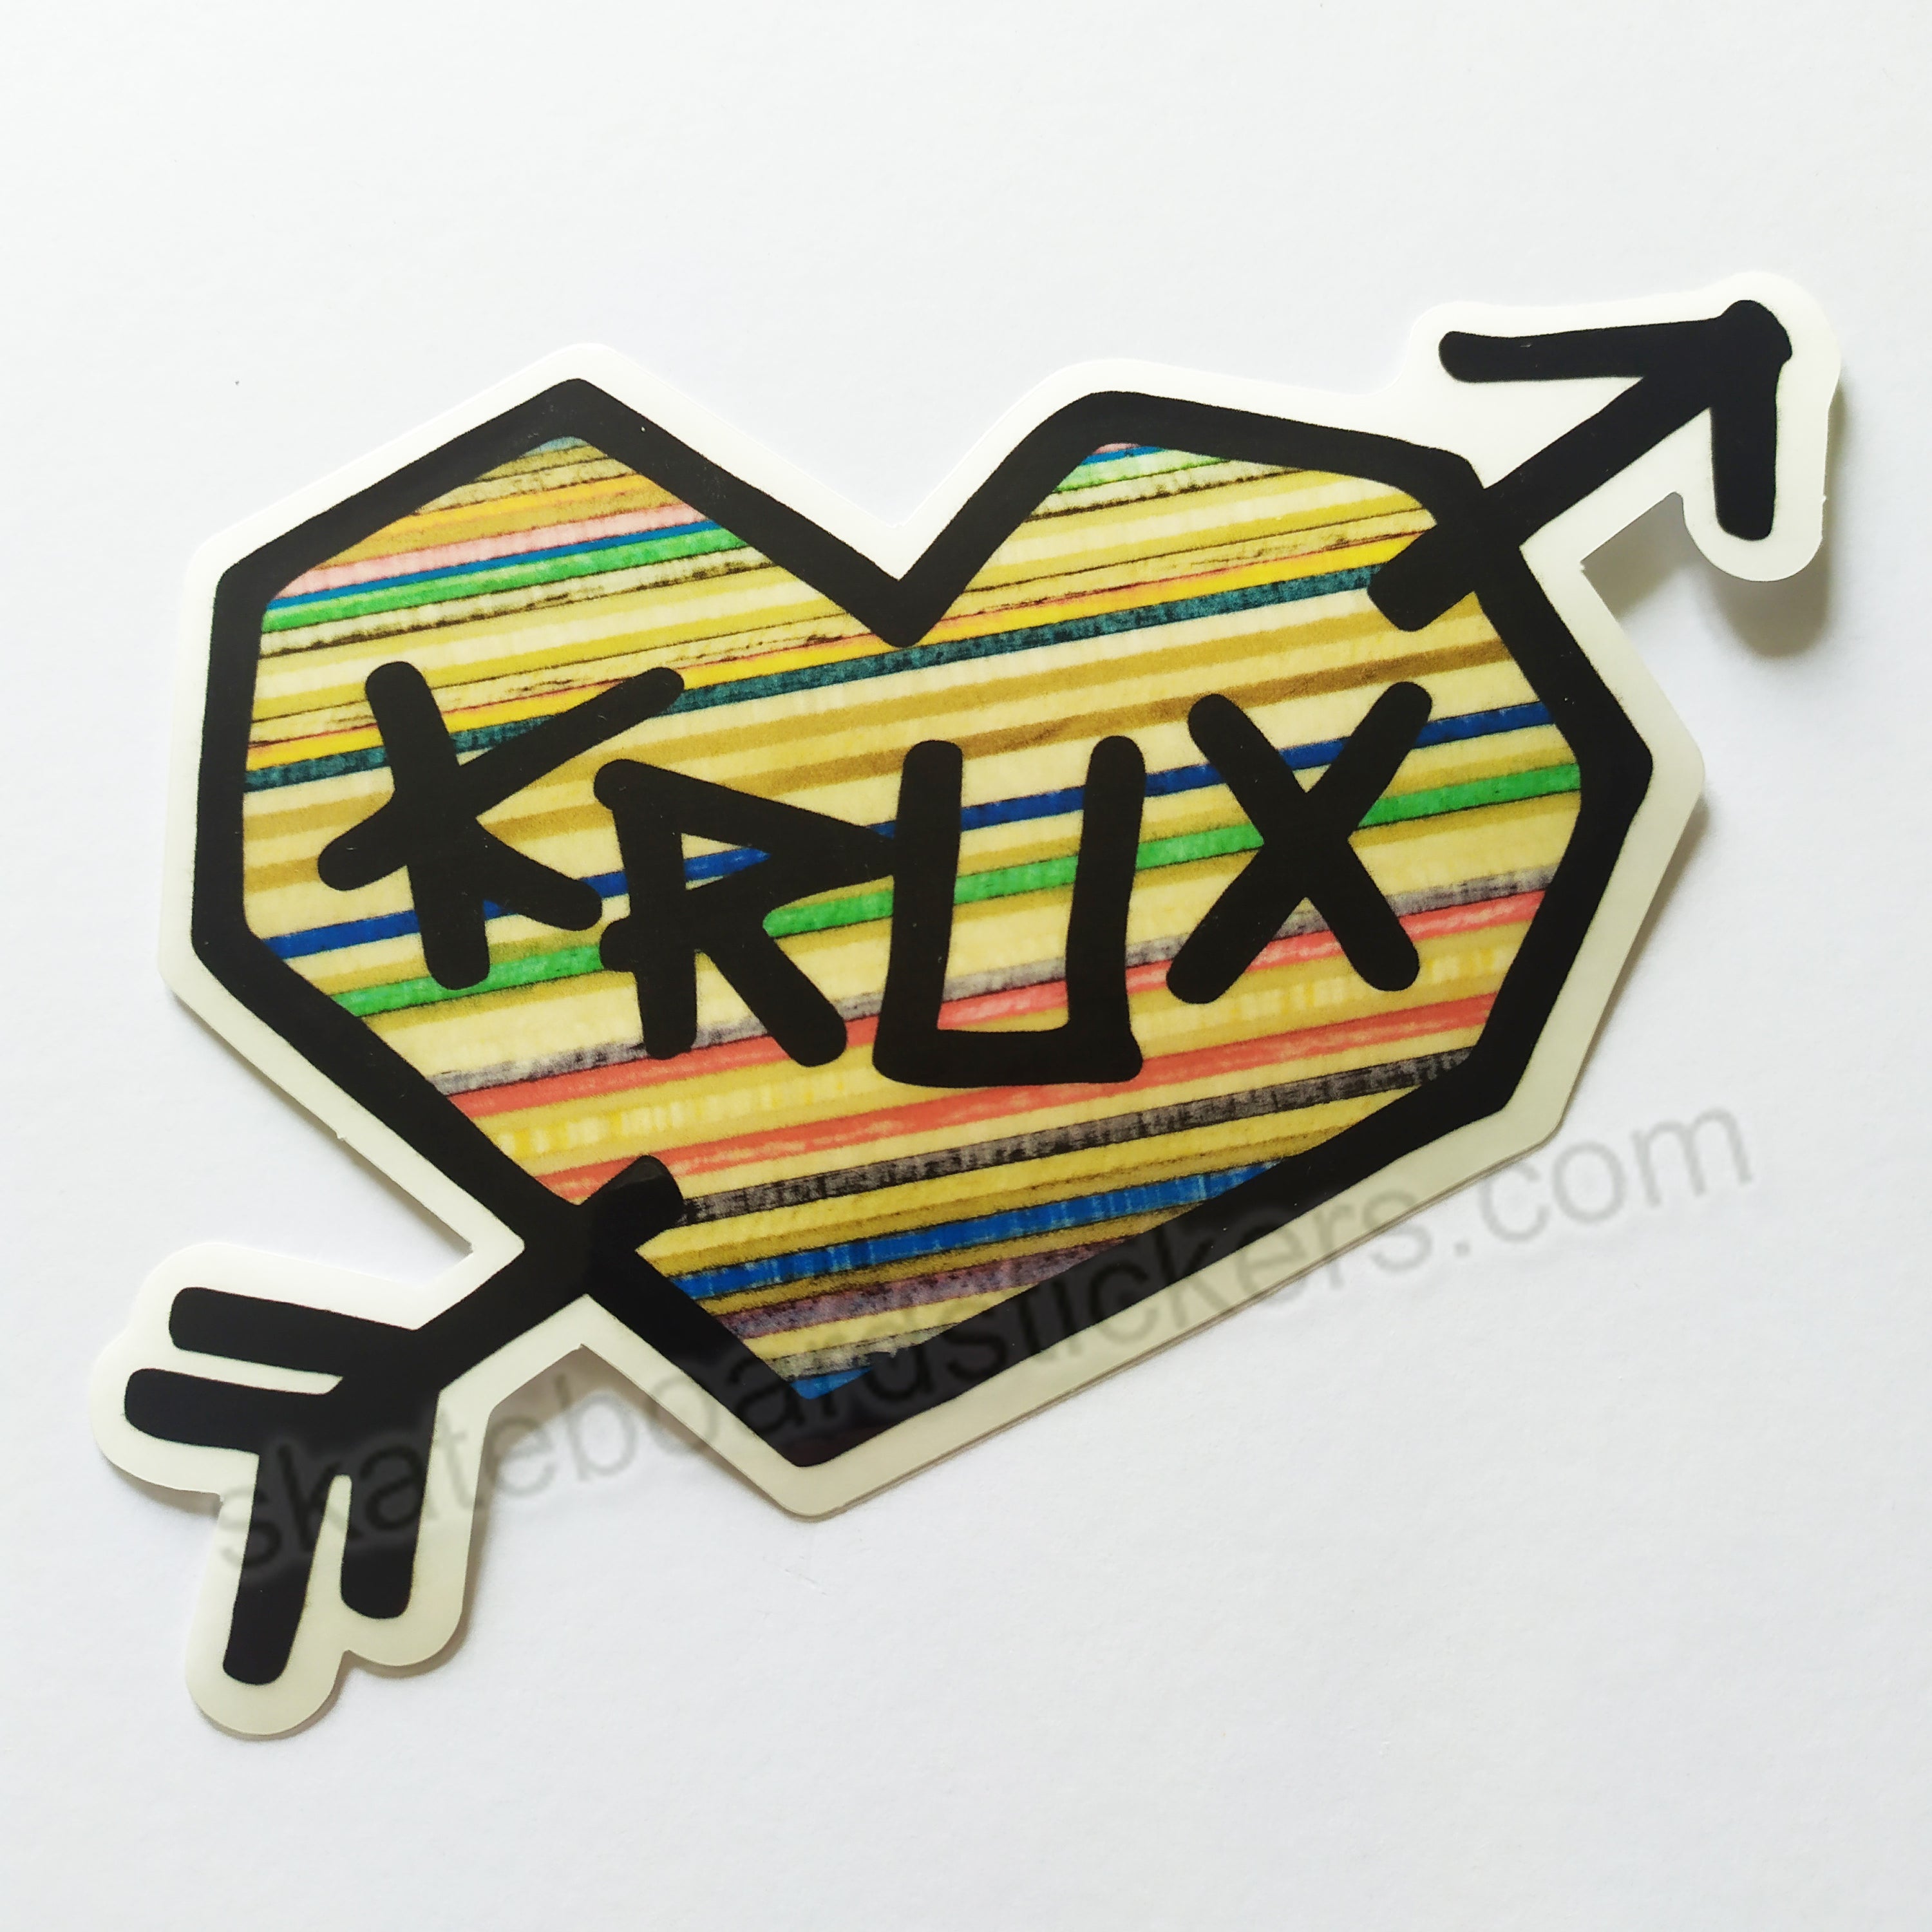 Krux Trucks Skateboard Sticker - "Heart" - SkateboardStickers.com